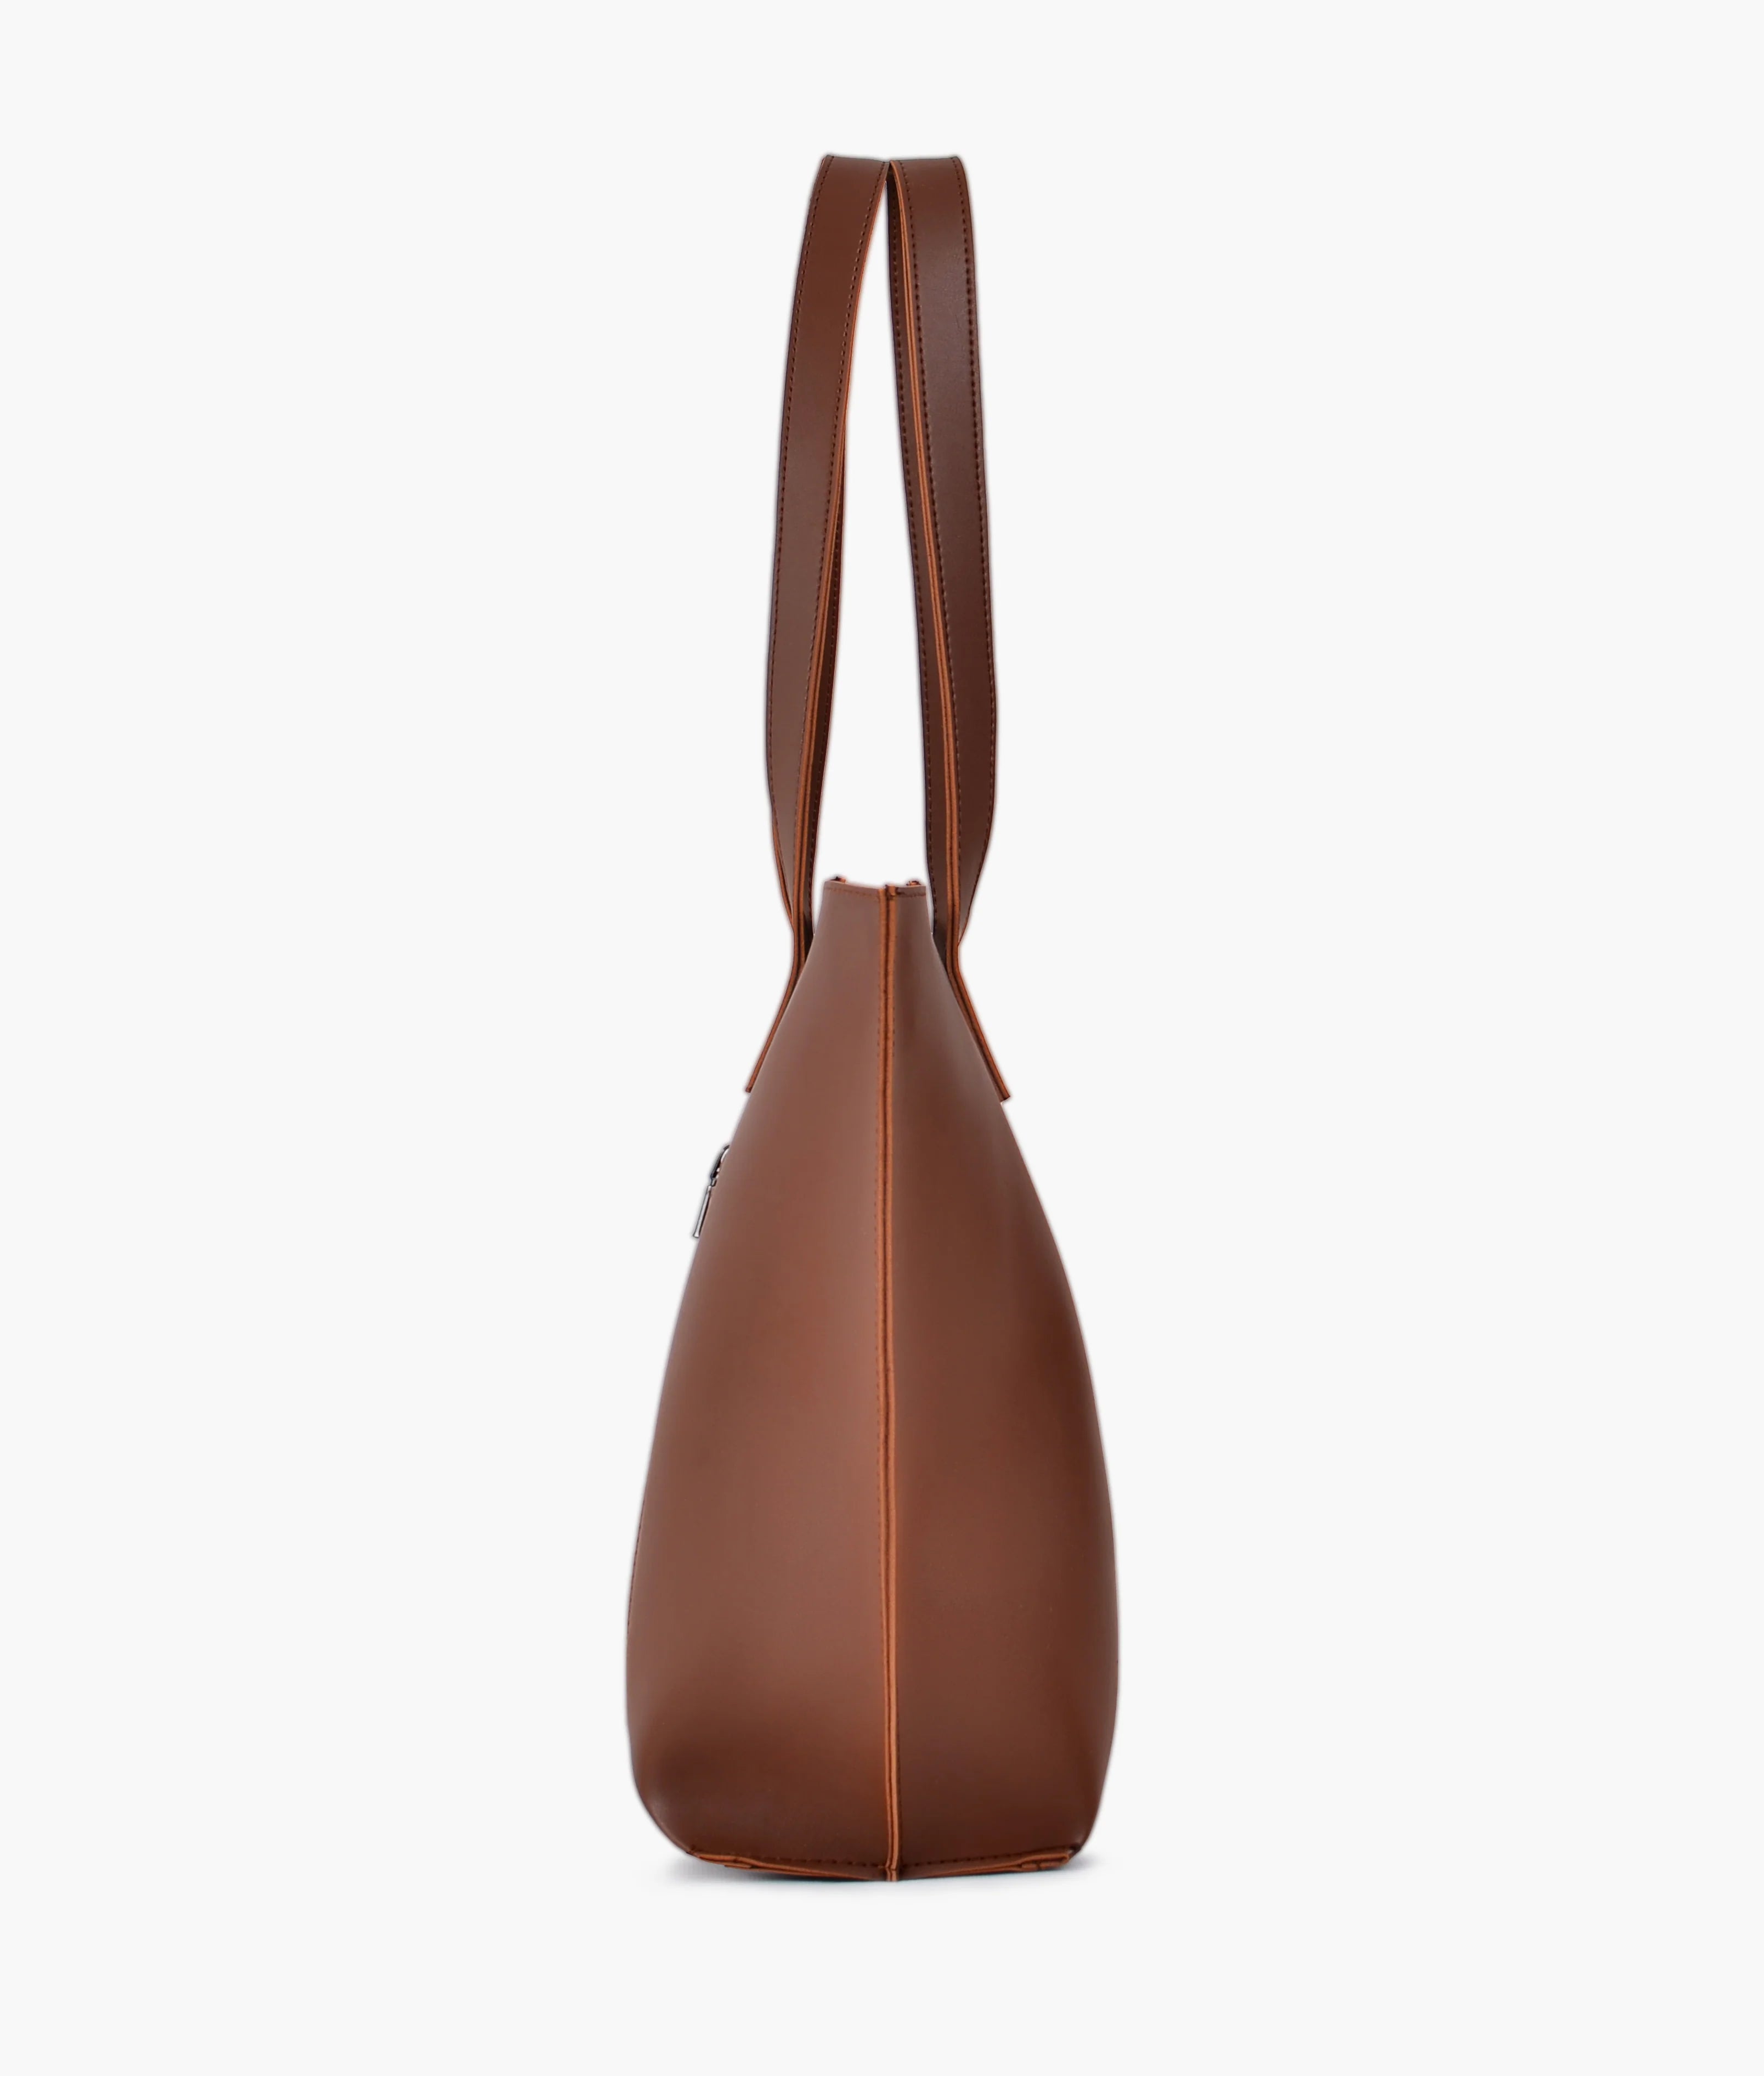 Tokyo Brown handbag